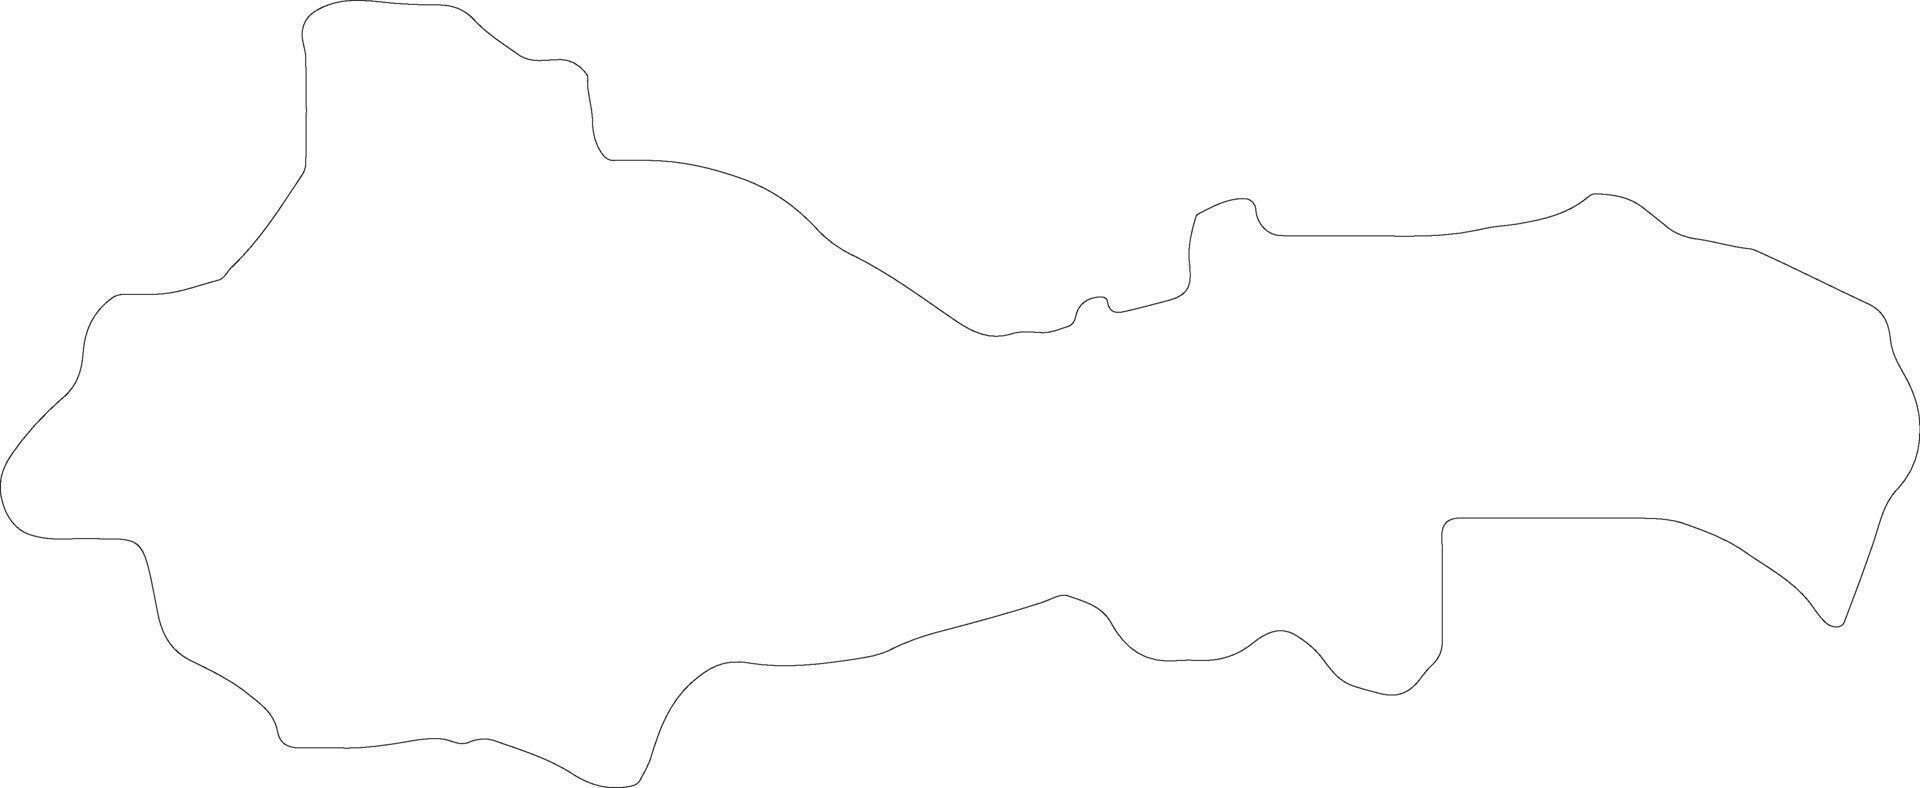 kratovo macedonia schema carta geografica vettore